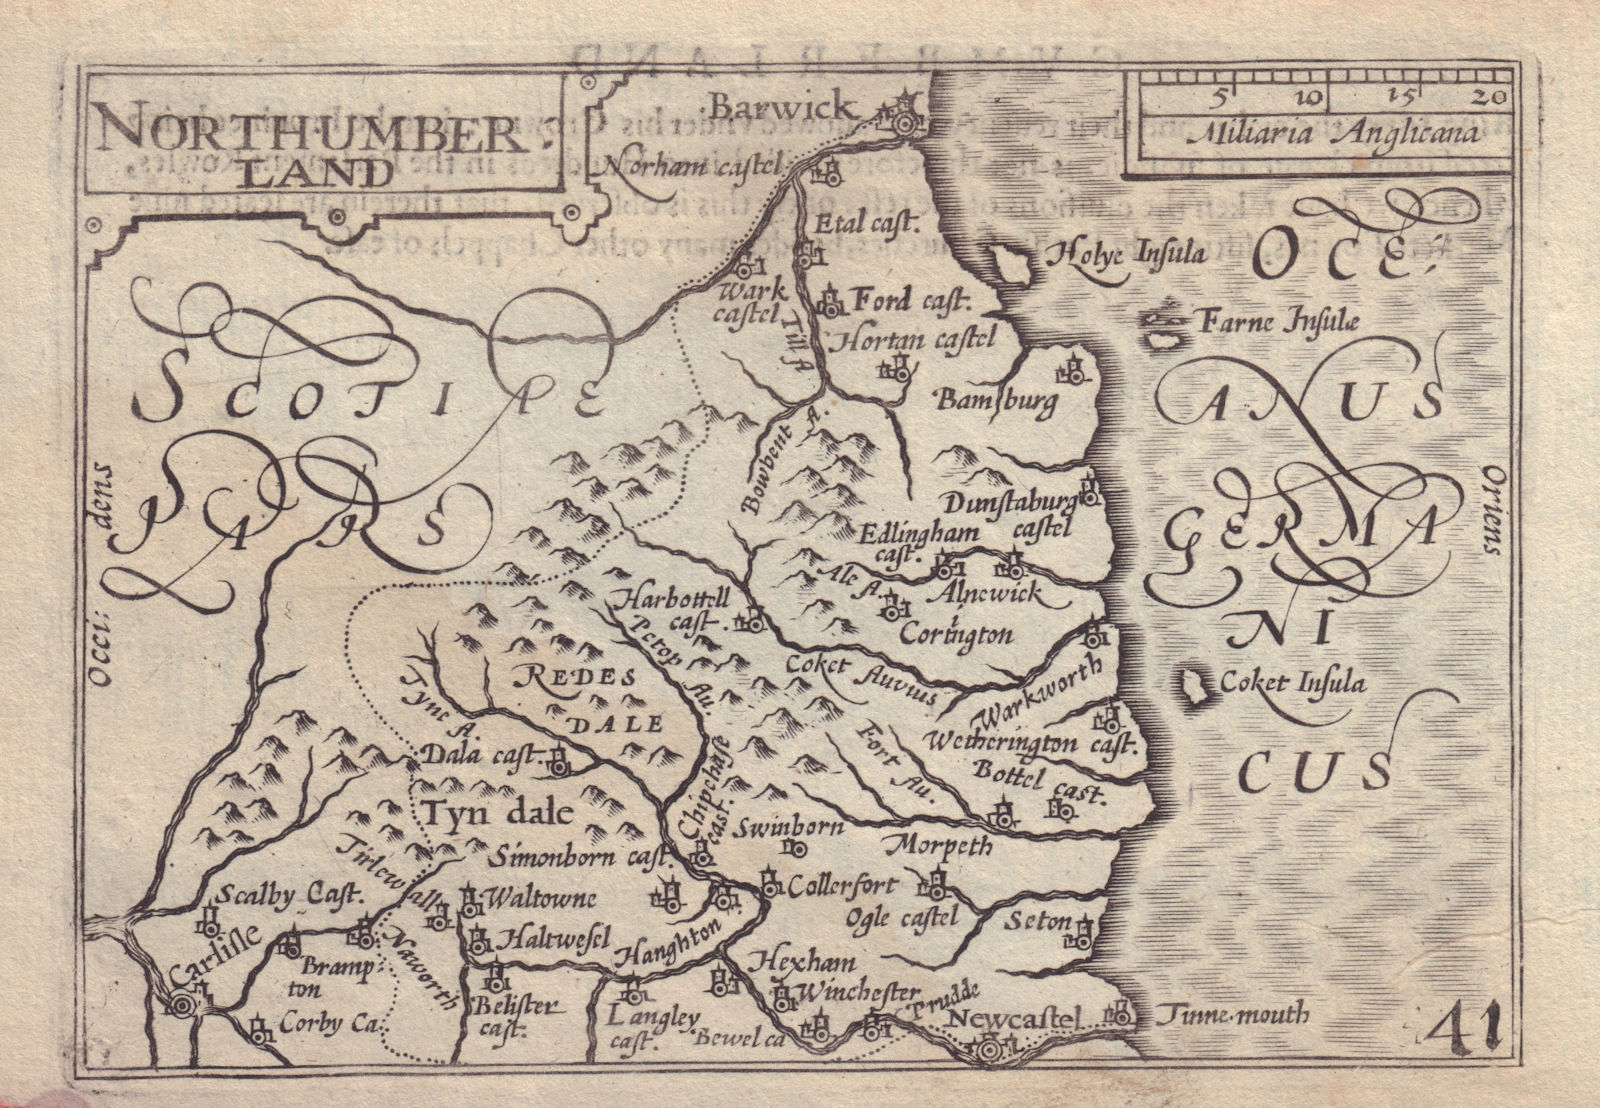 Northumberland by van den Keere. "Speed miniature" county map 1632 old